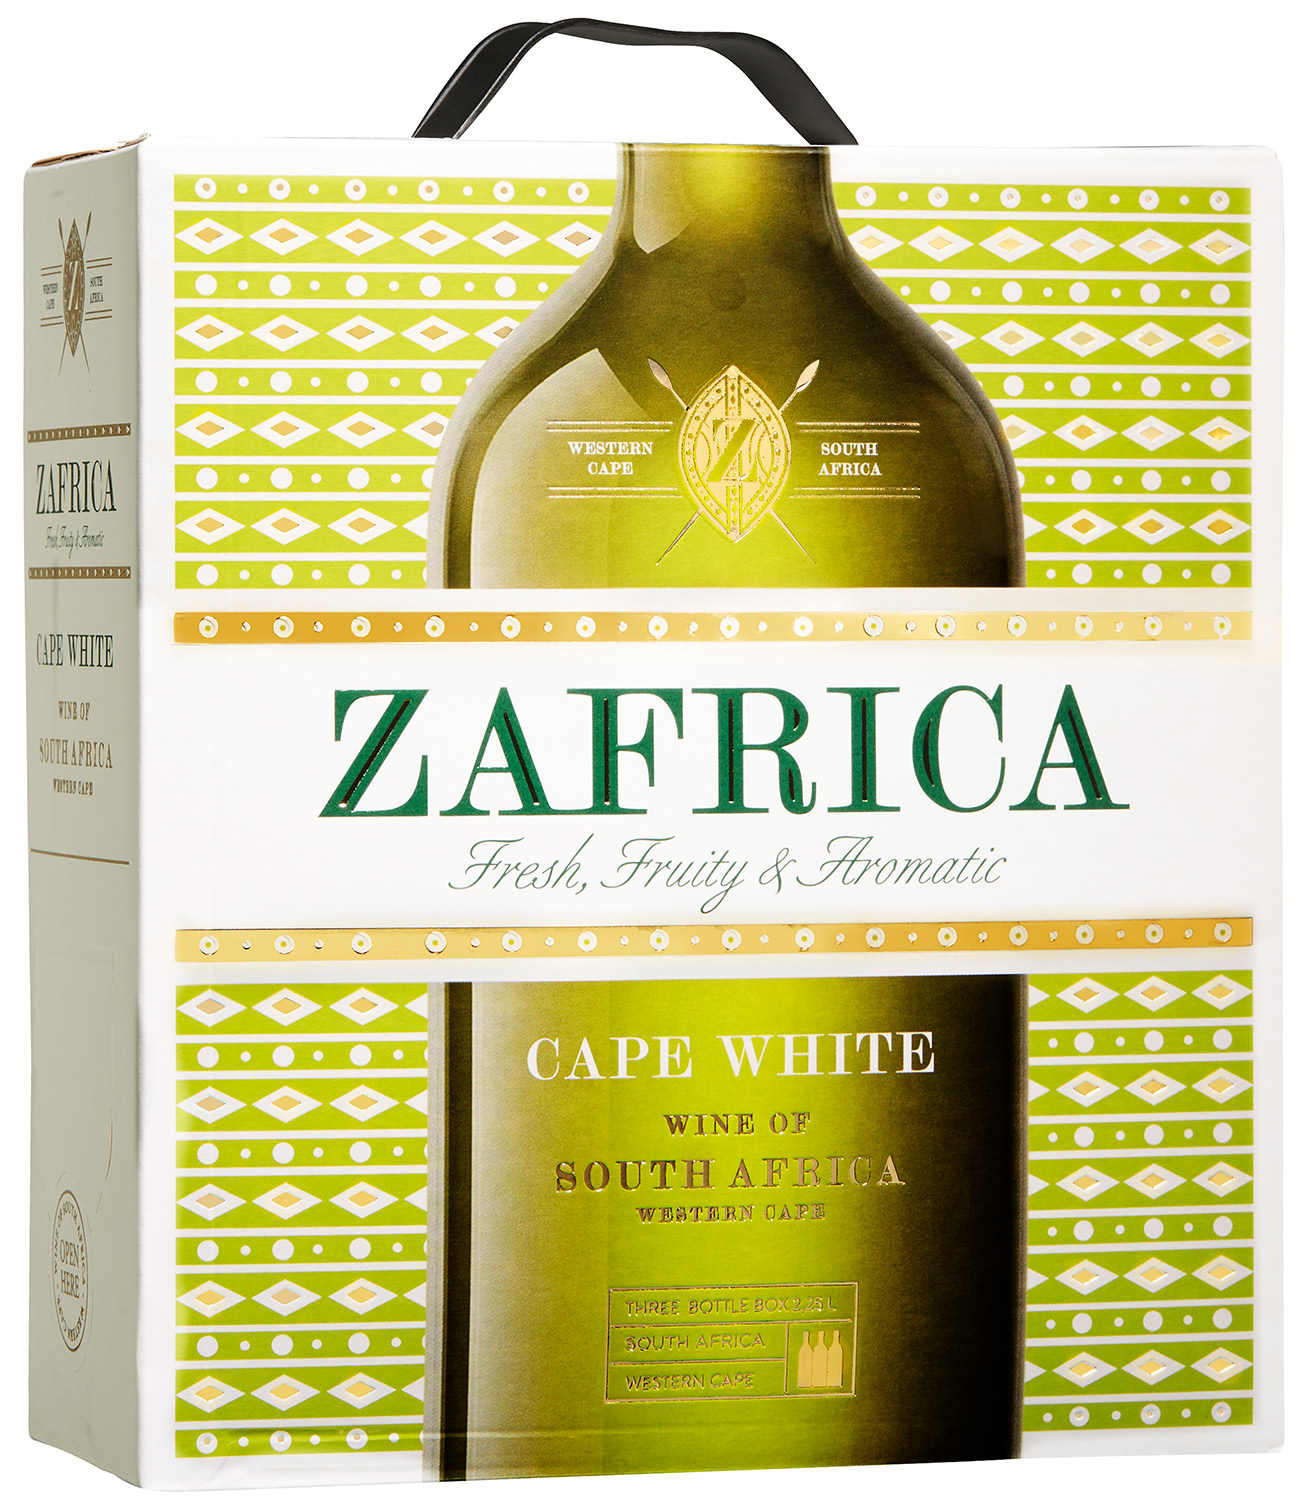 Zafrica Cape White